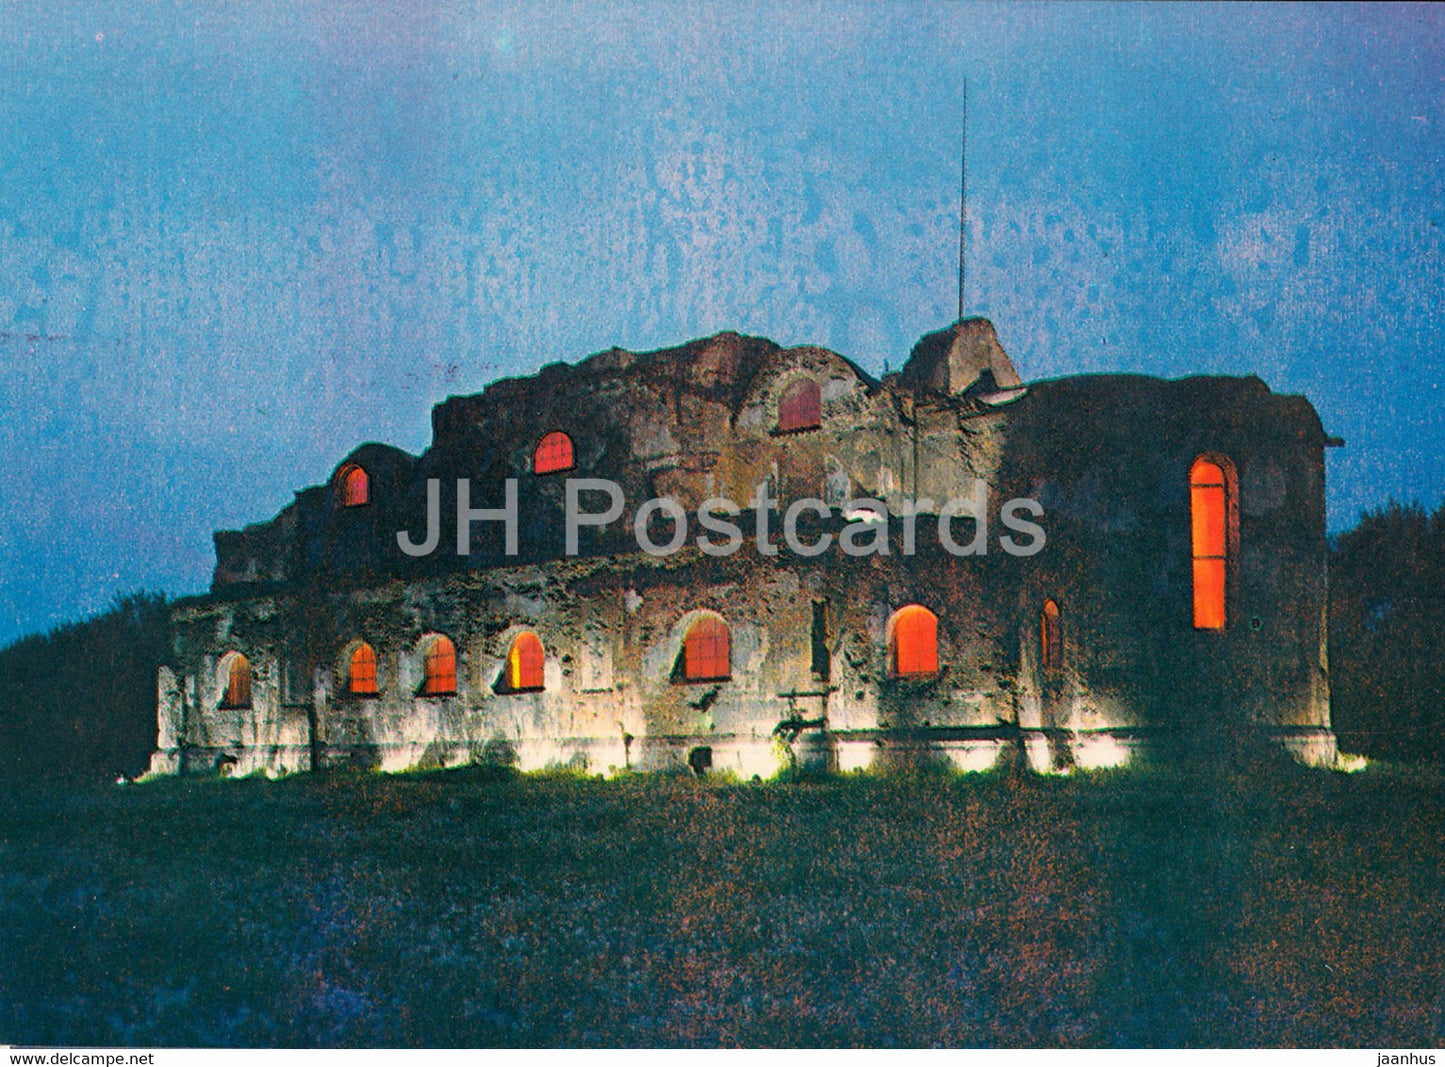 Brest Fortress - Garrison Club by Night - 1984 - Belarus USSR - unused - JH Postcards